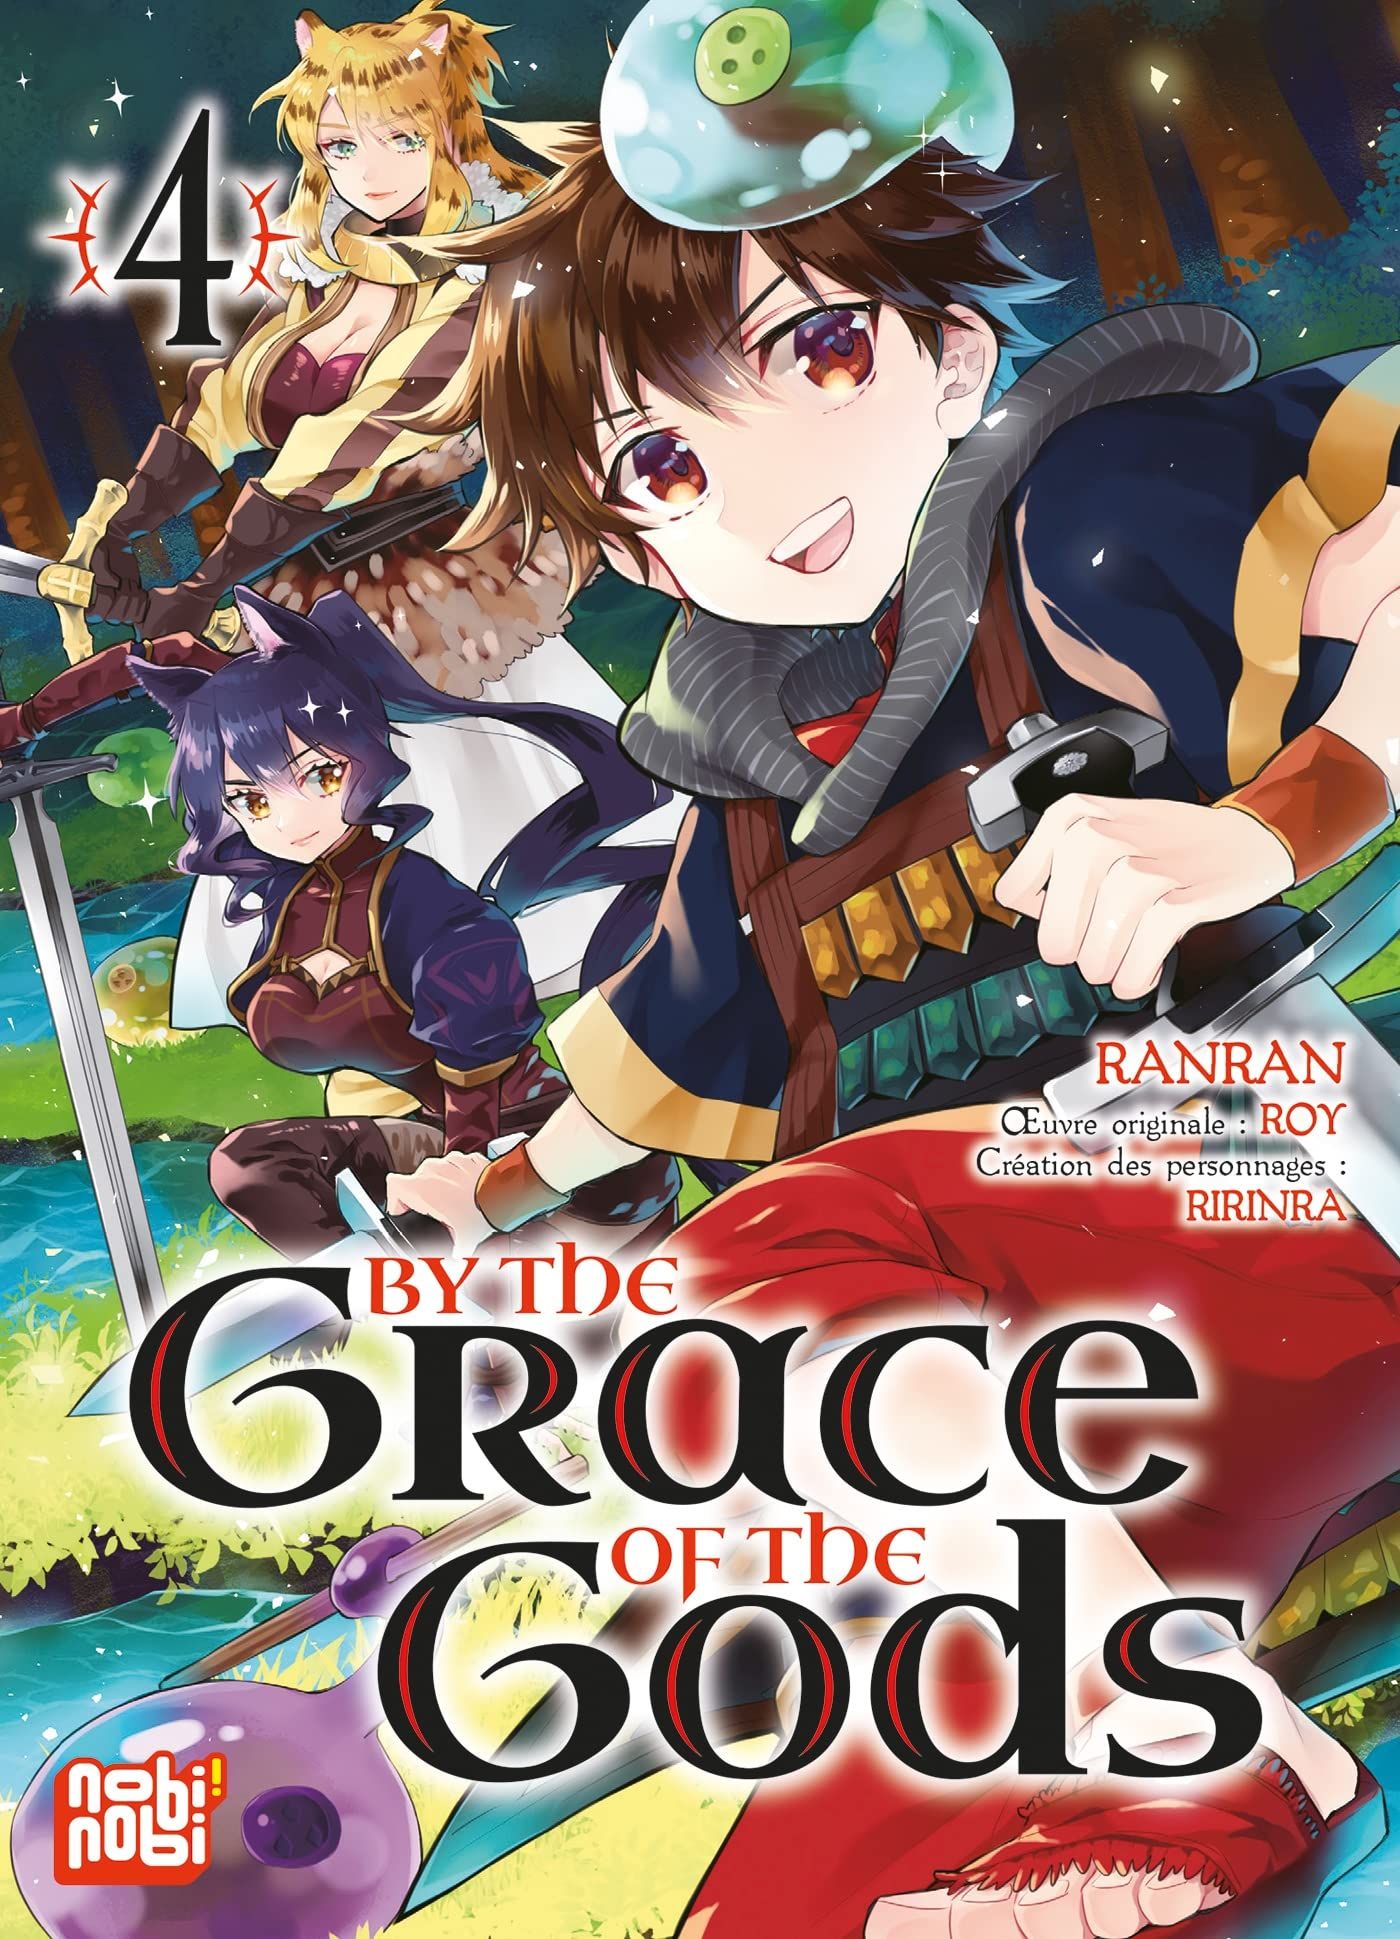 By the grace of the gods - Manga série - Manga news